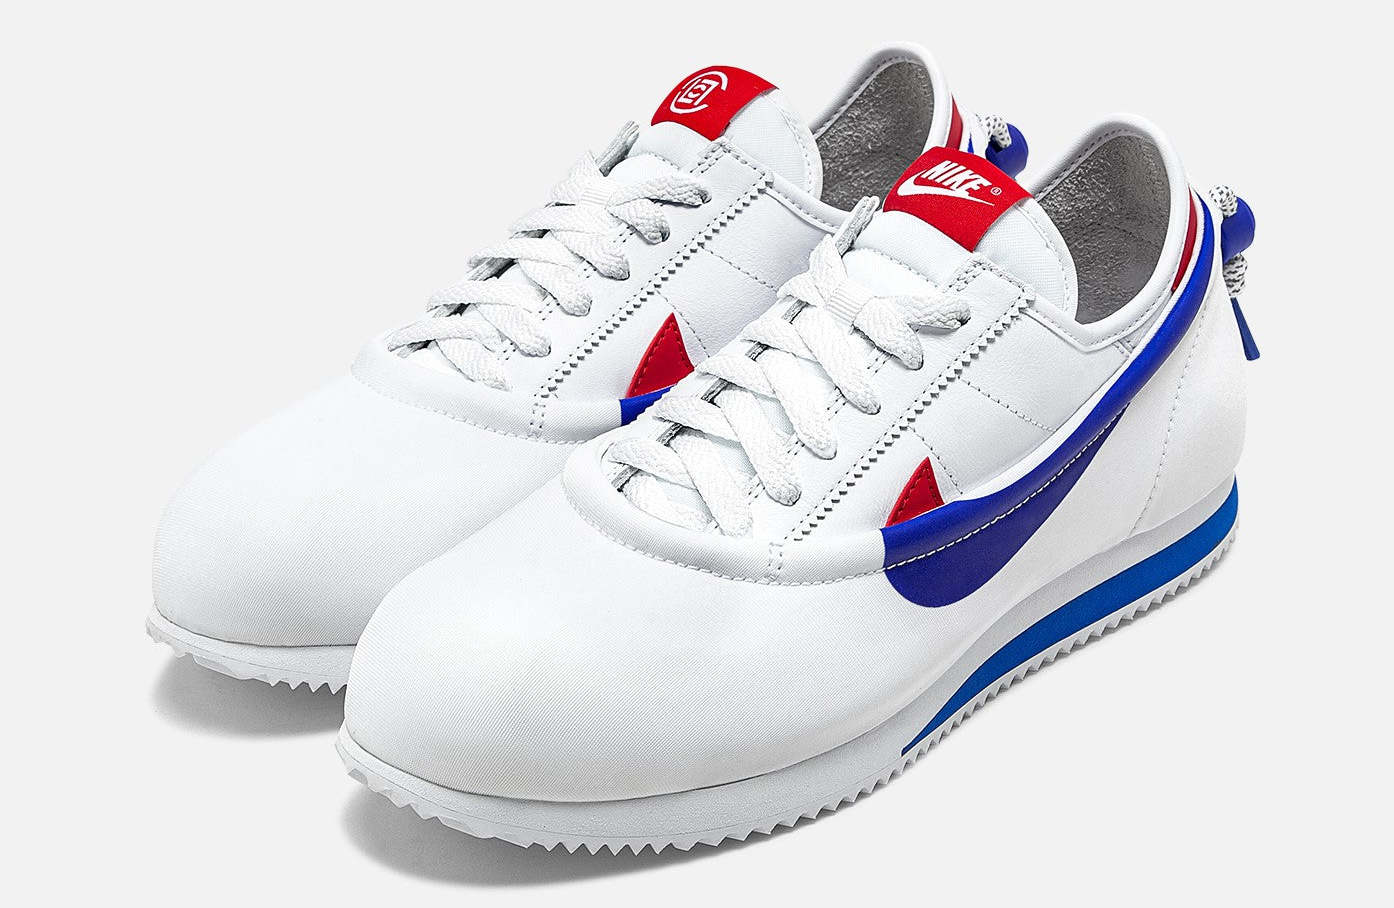 Clot x Nike Cortez 'Clotez' Collab Red/White/Blue April 2023